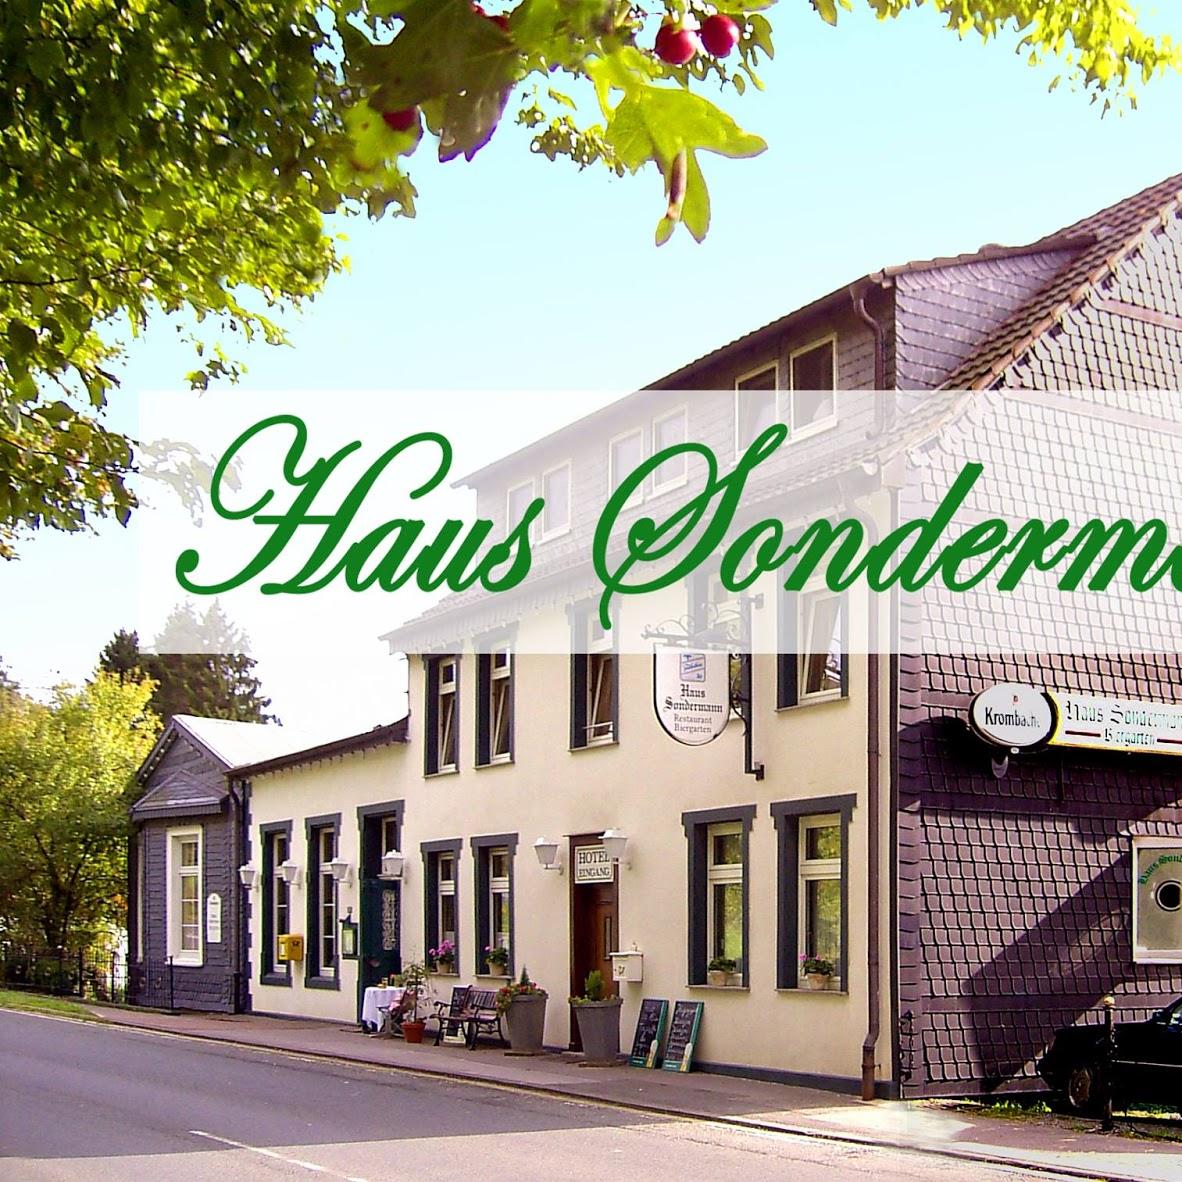 Restaurant "Haus Sondermann" in Velbert